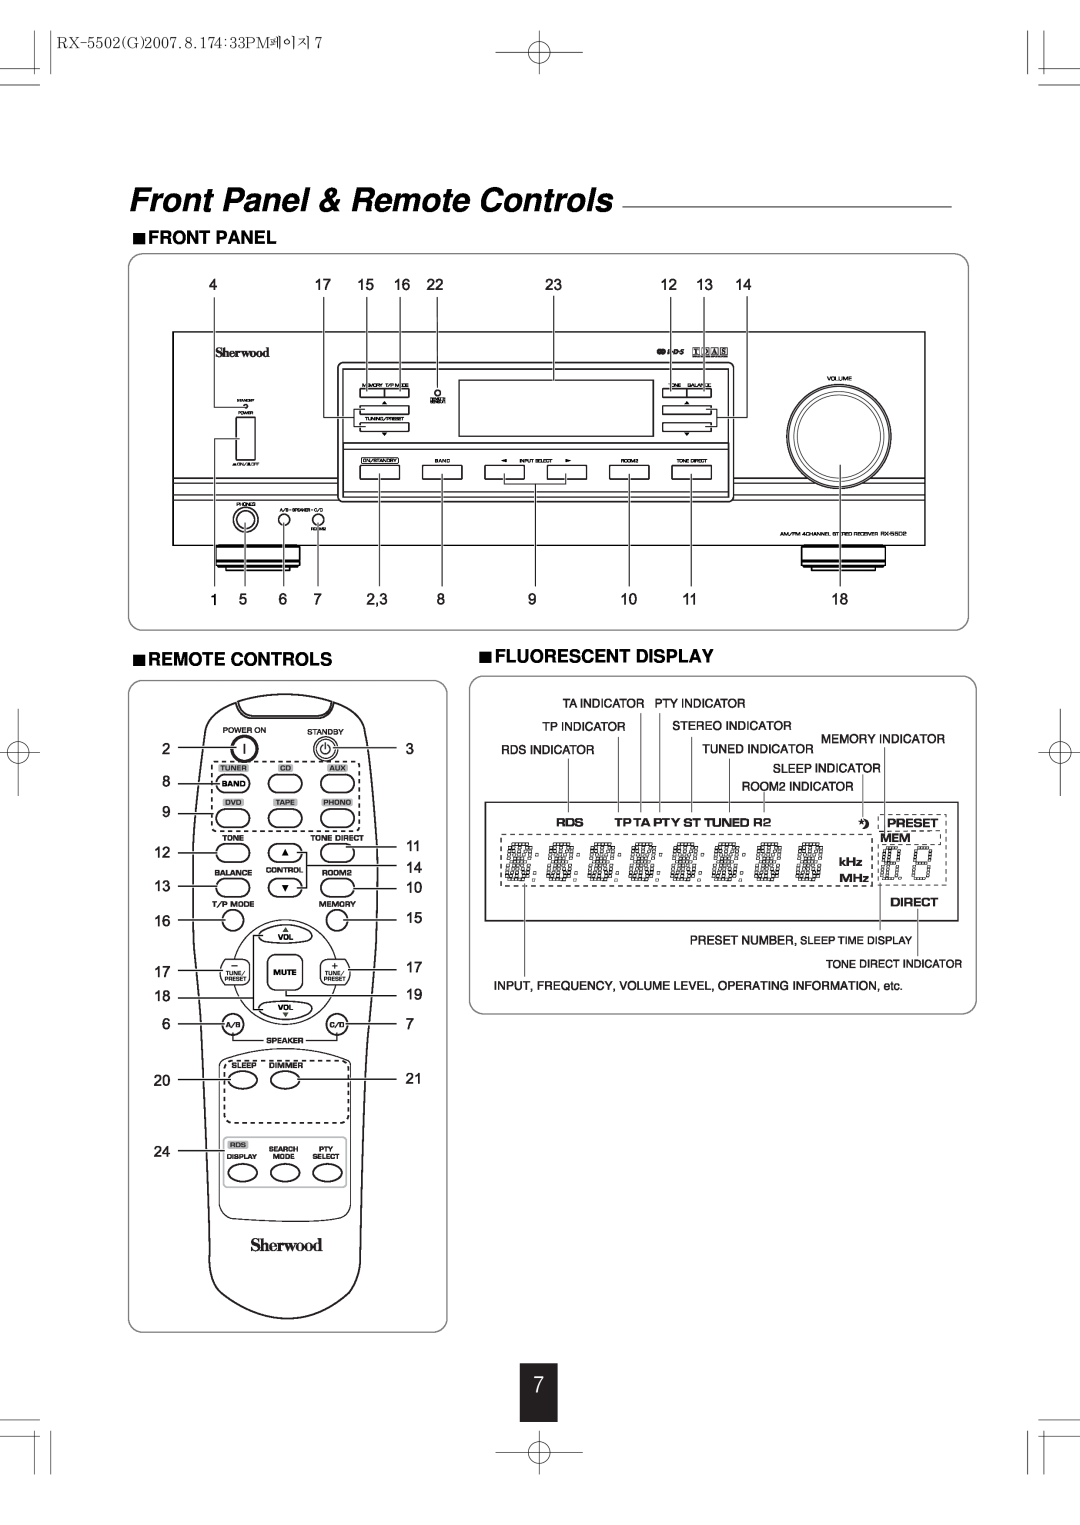 Sherwood manual Front Panel & Remote Controls, Fluorescent Display, RX-5502G2007.8.174 33PM페이지 